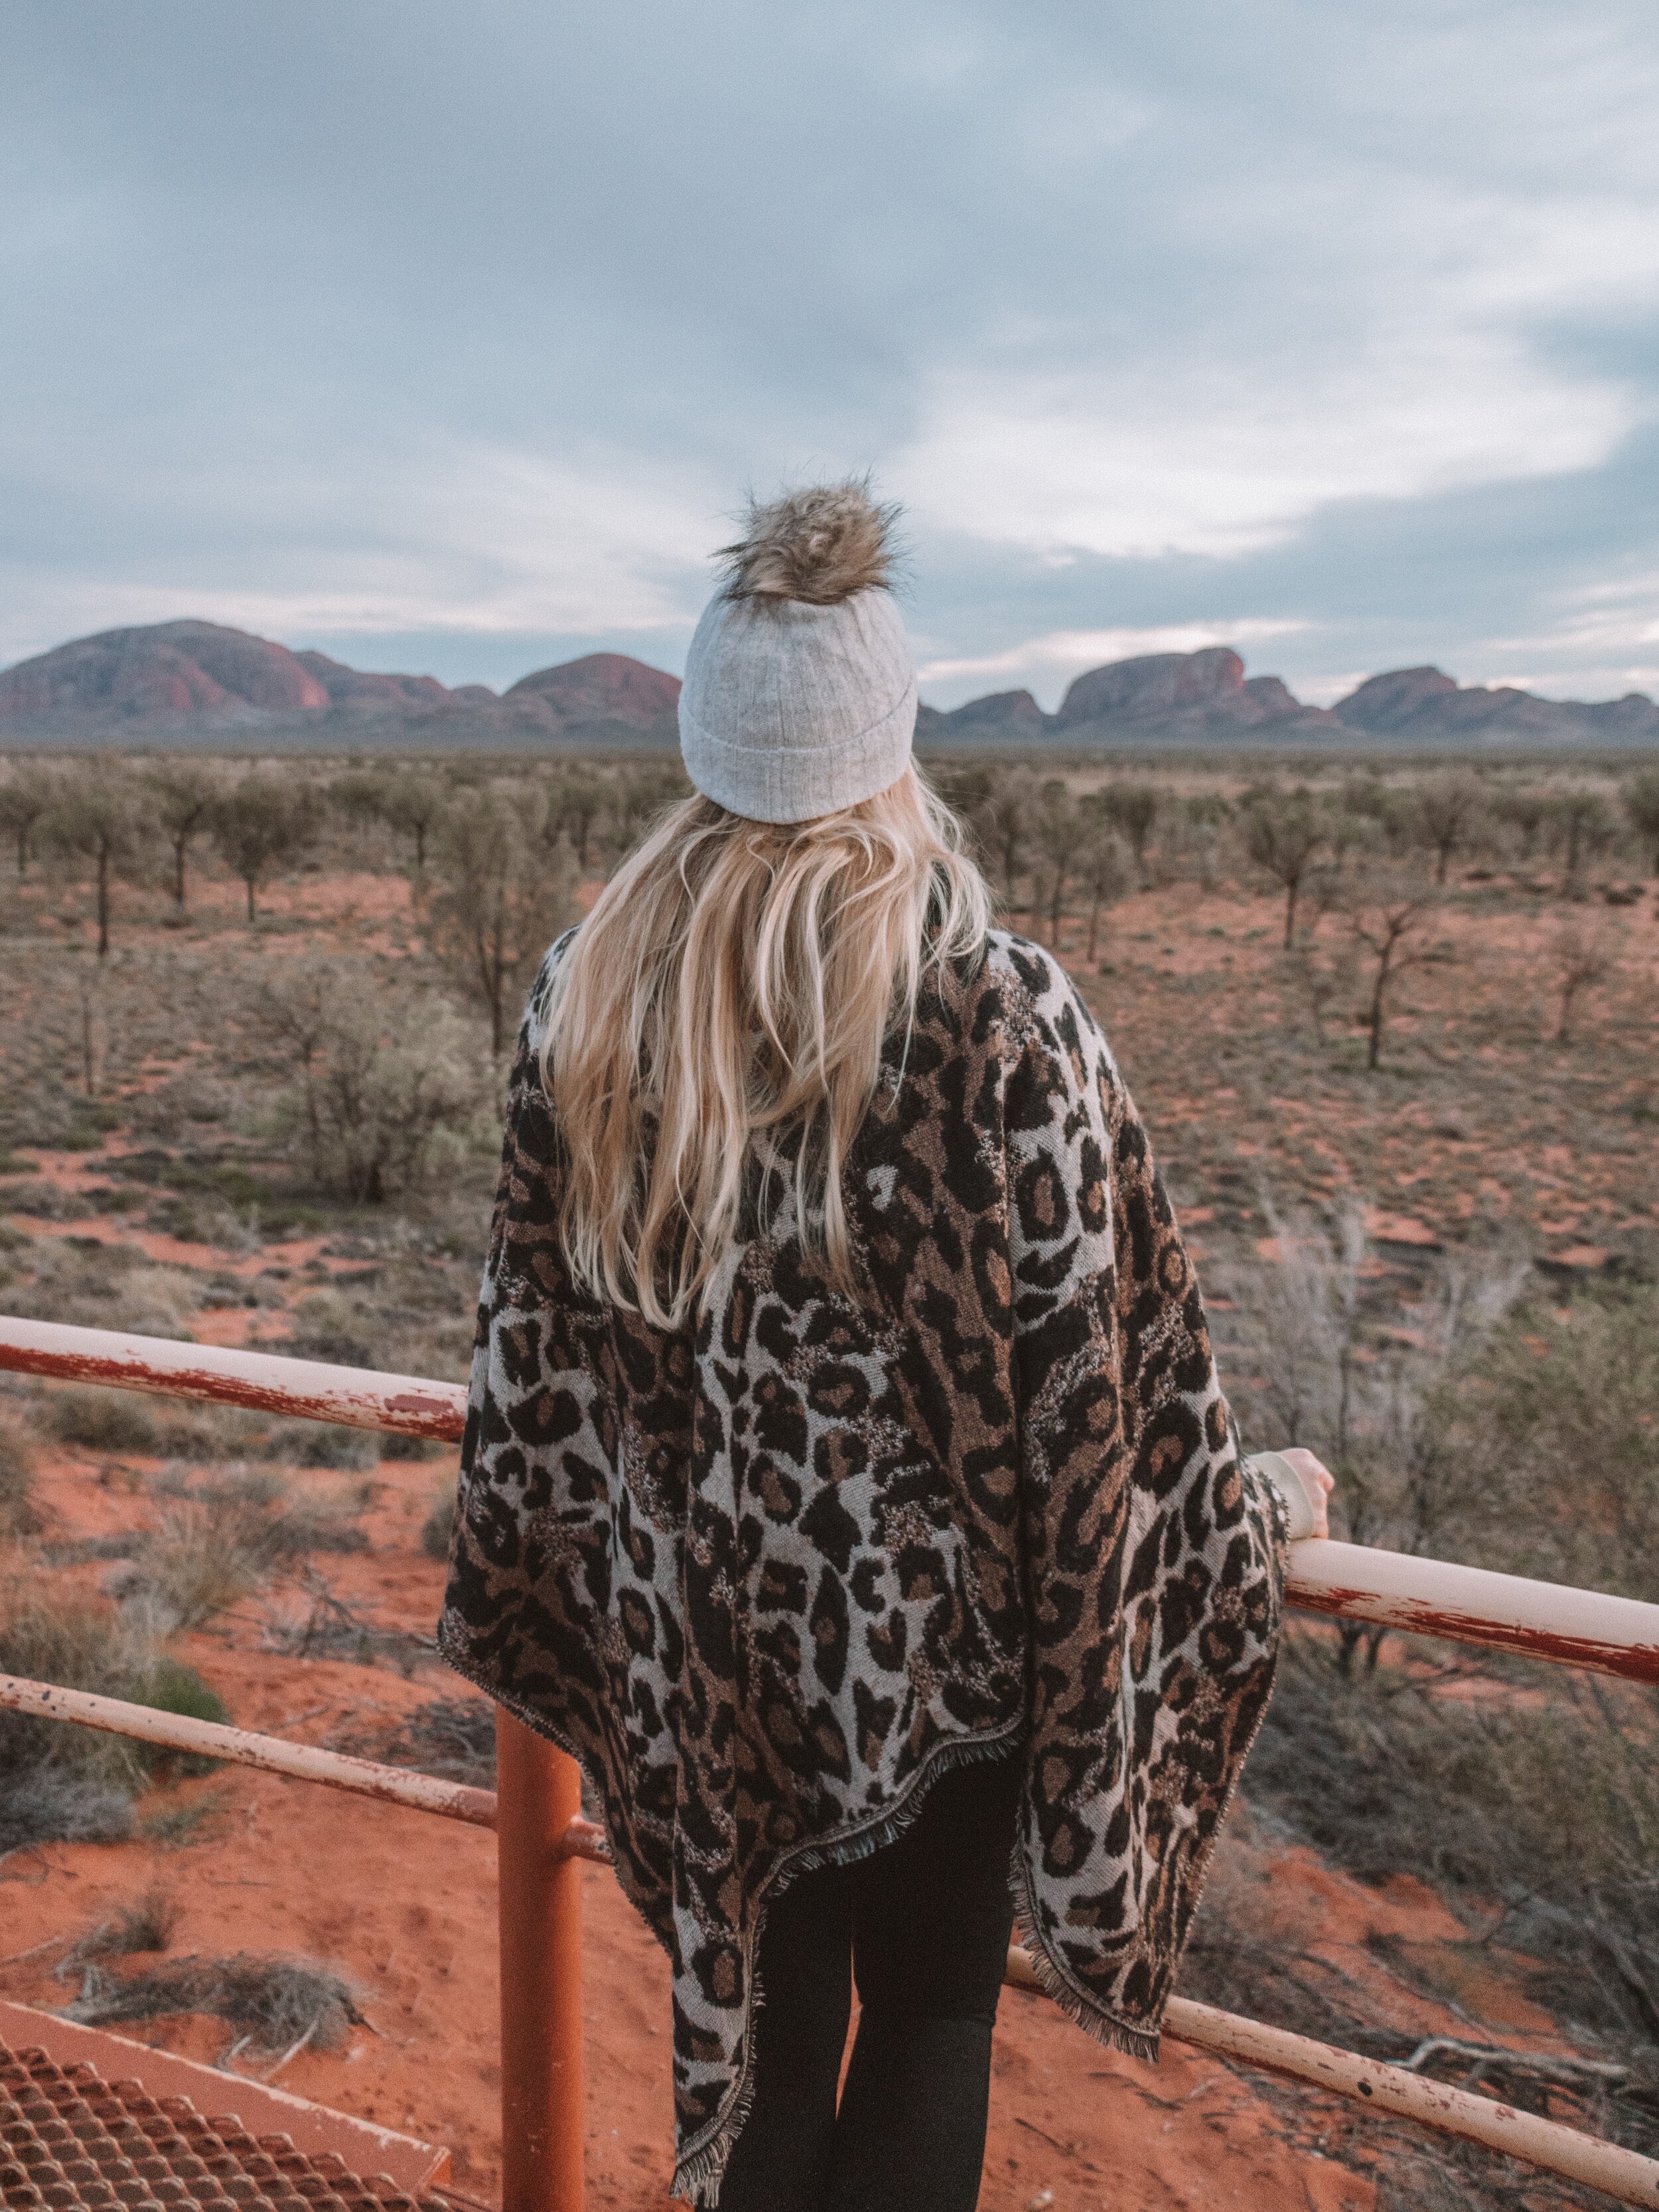 Me staring at Kata Tjuta - Uluru - Northern Territory - Australia